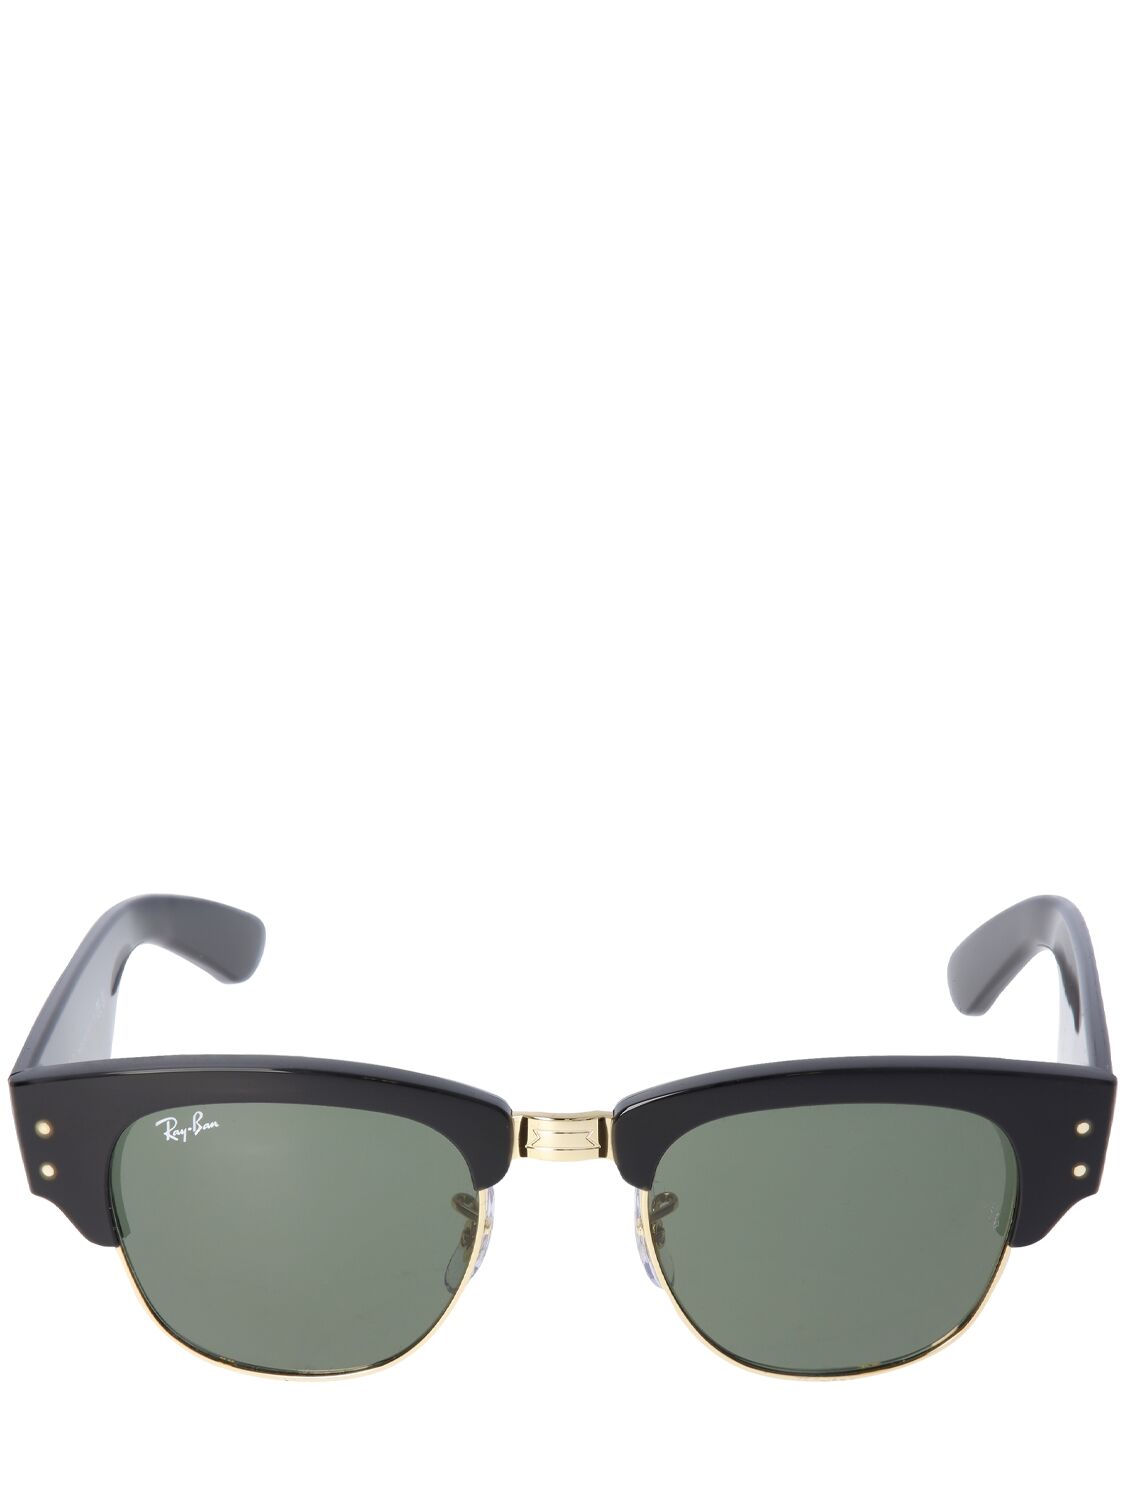 Ray Ban Mega Clubmaster Acetate Sunglasses In Gray